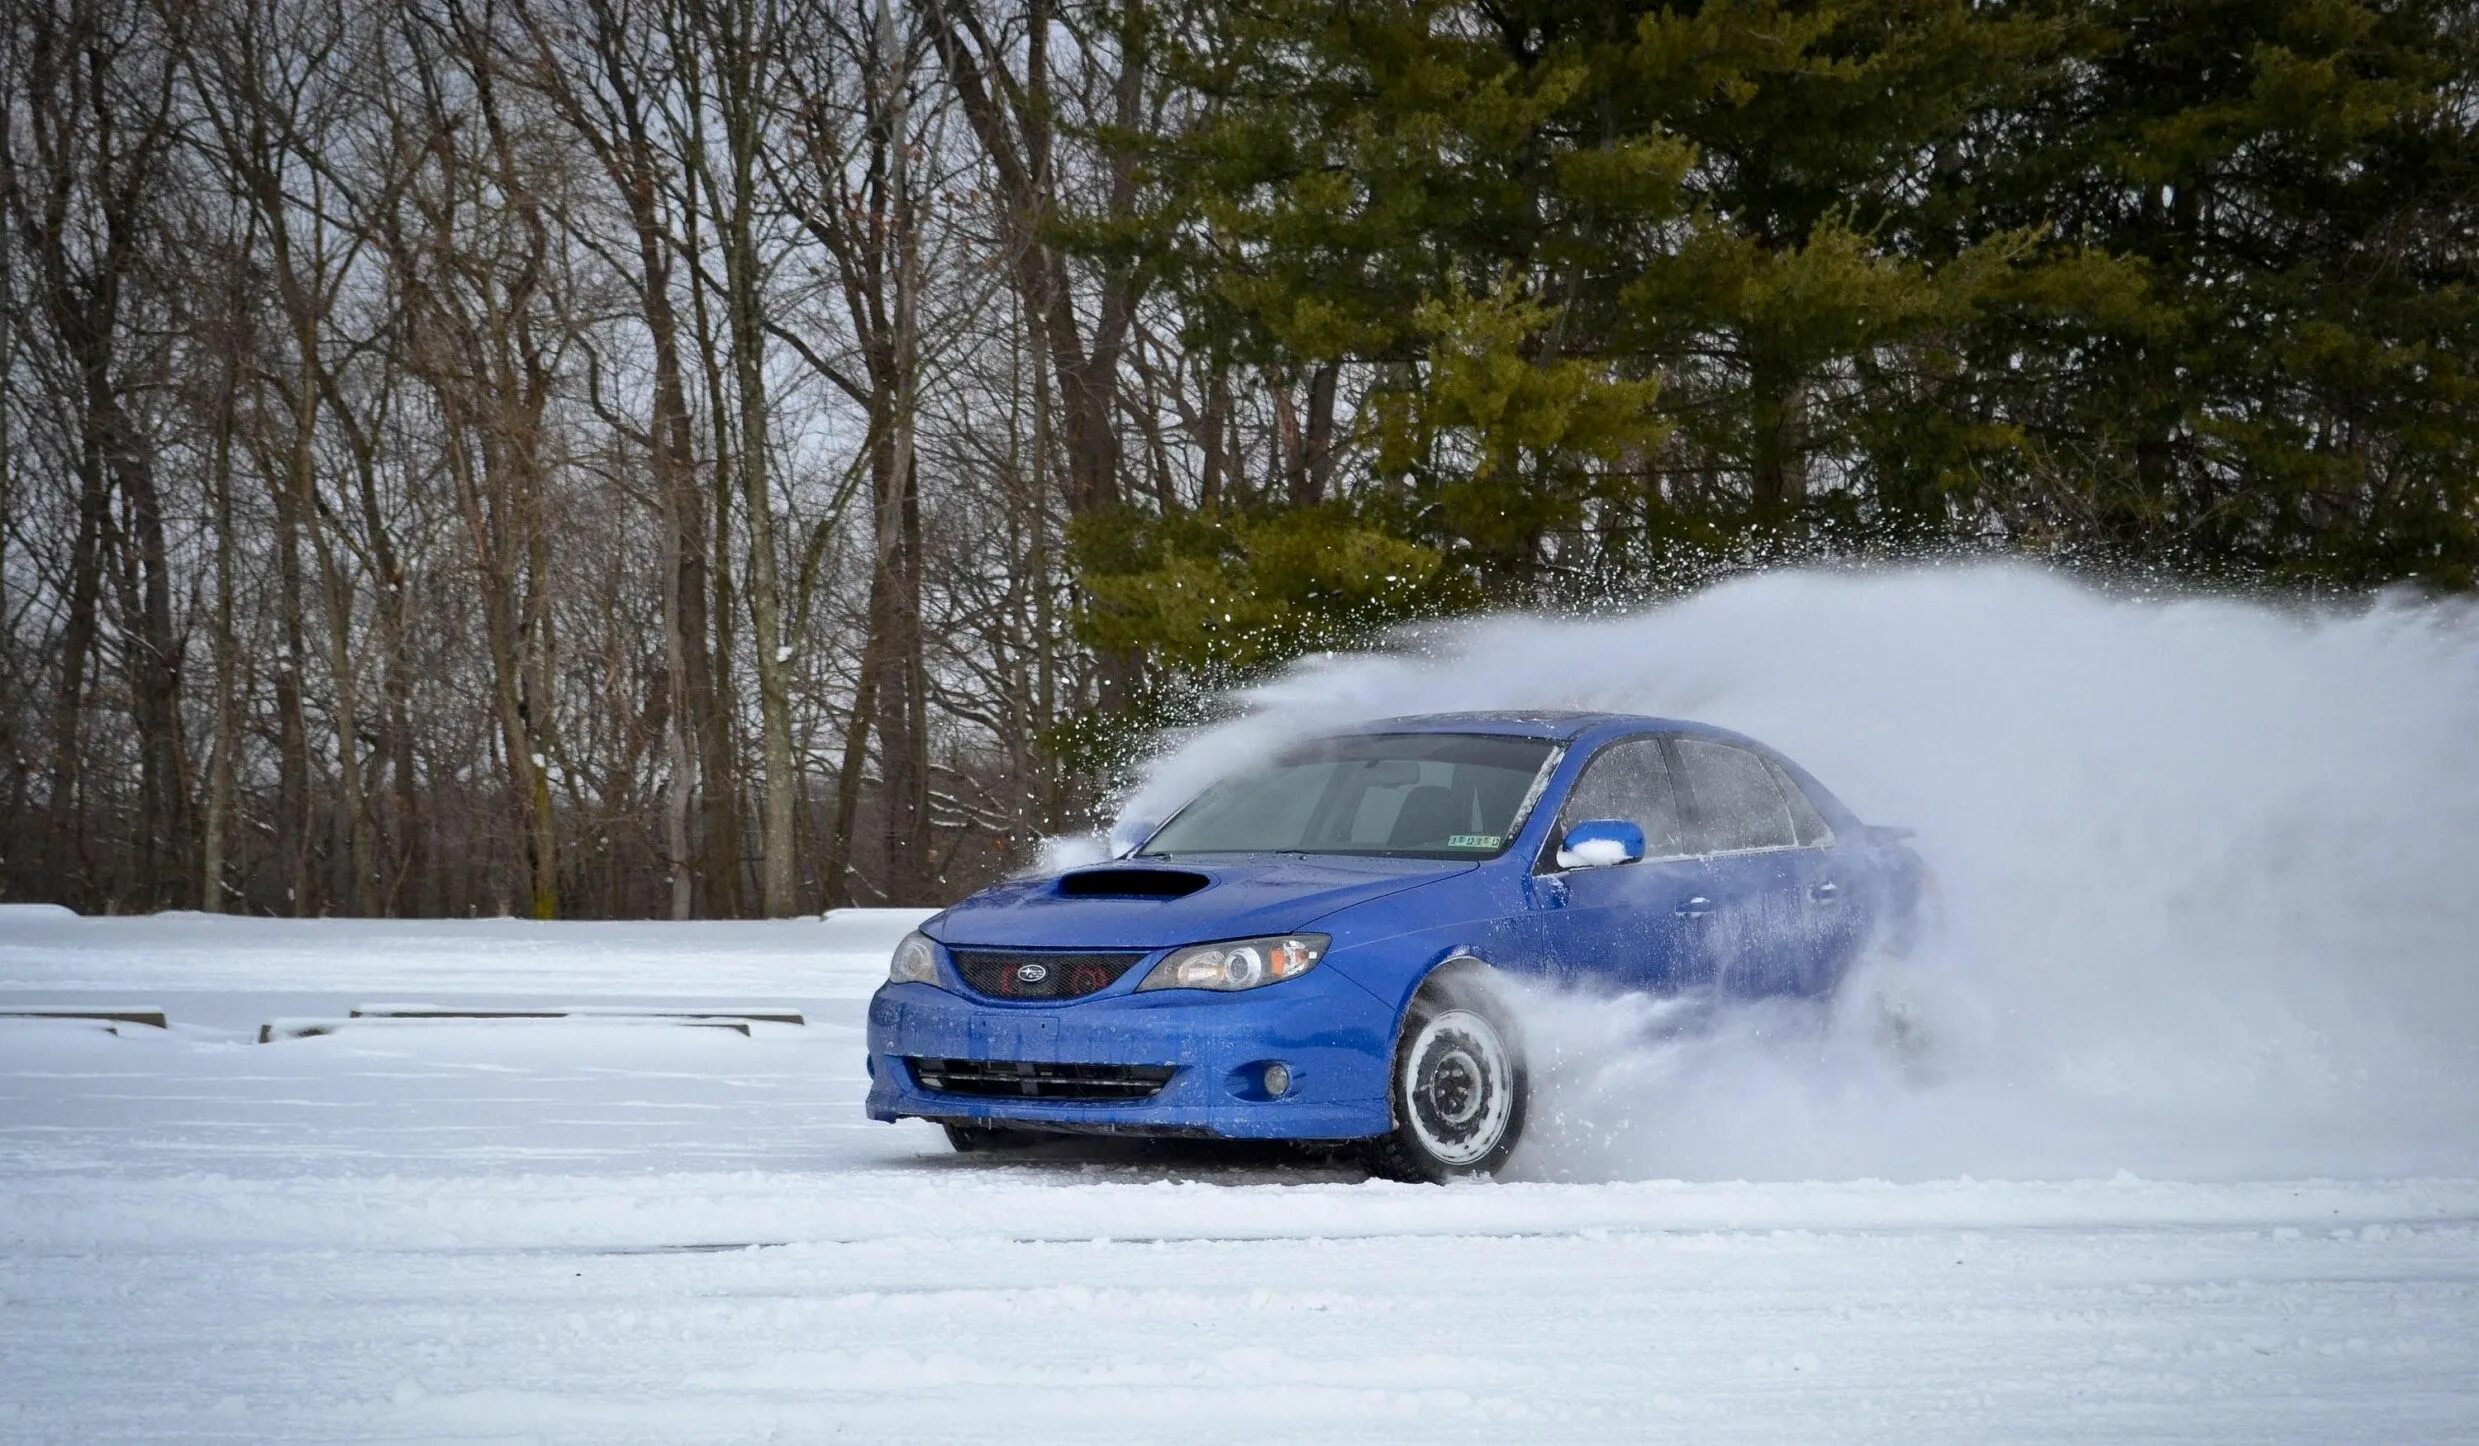 Drifting snow. Subaru Impreza дрифт. Субару зимний дрифт. Субару Импреза дрифт зимой. Полный привод дрифт Субару.